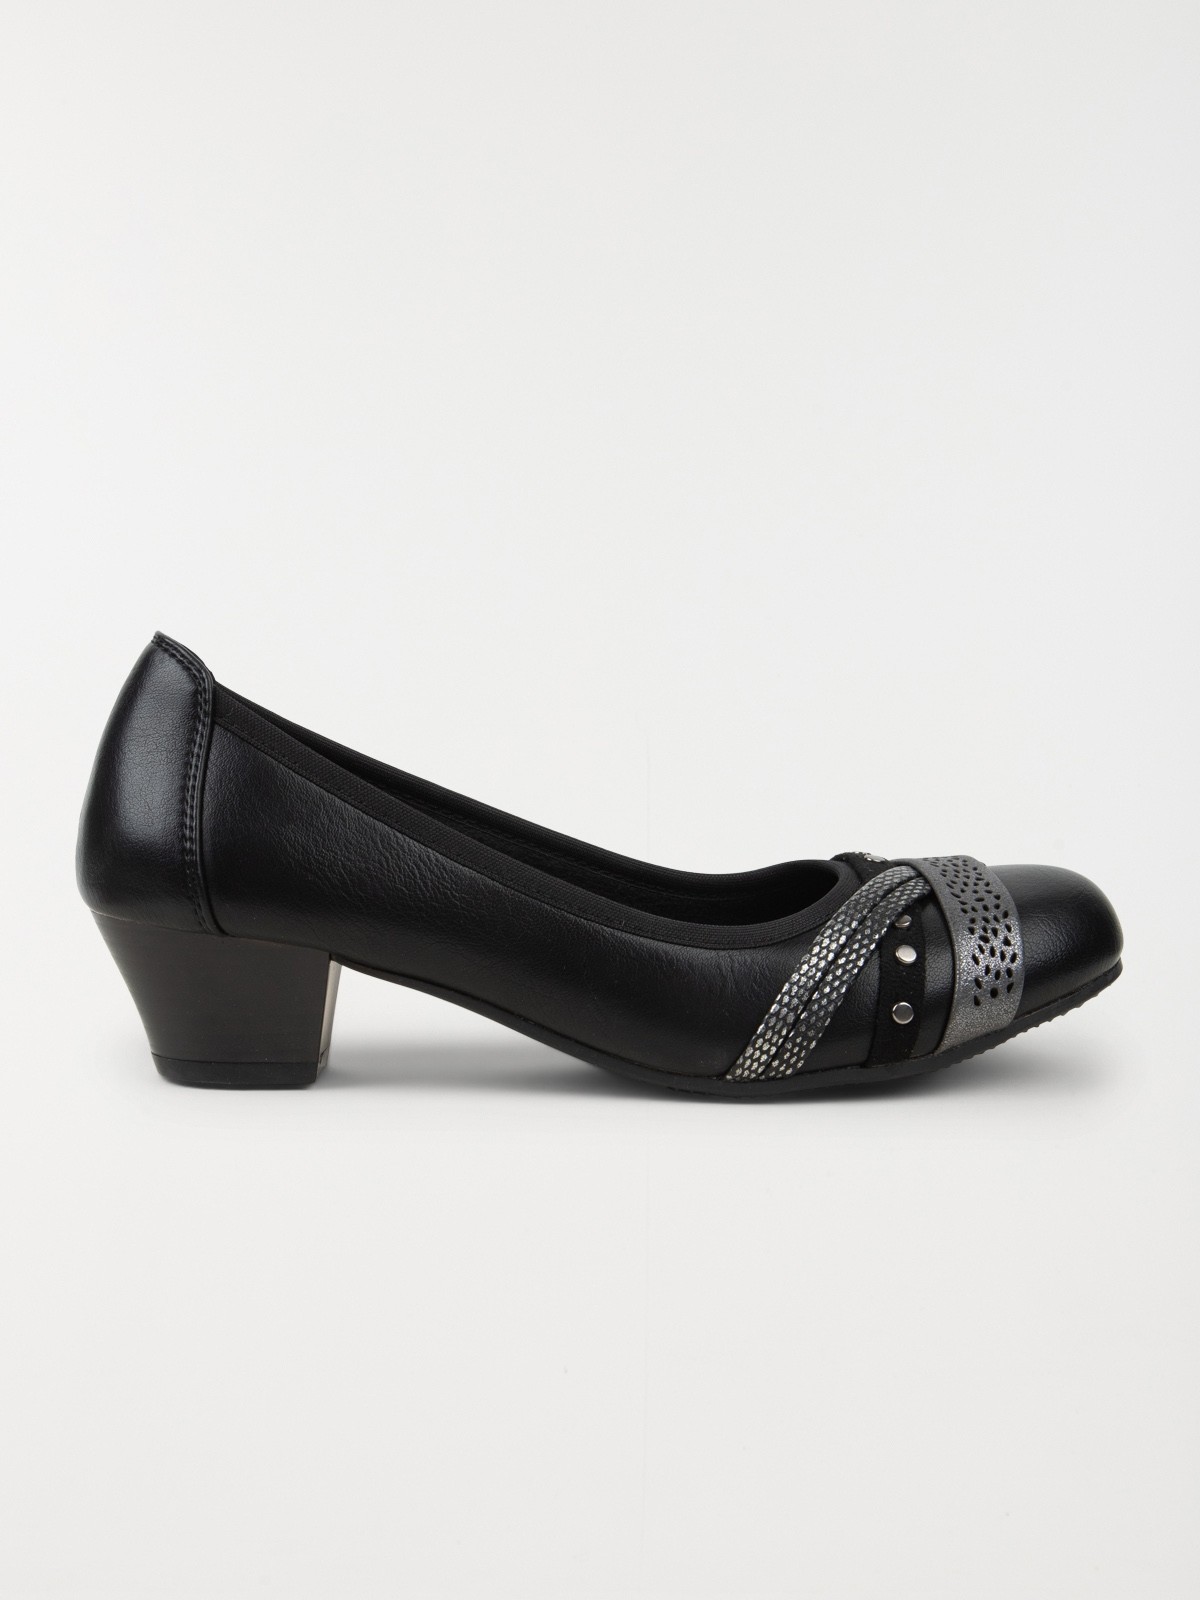 Chaussures confort femme noires (36-41) - DistriCenter